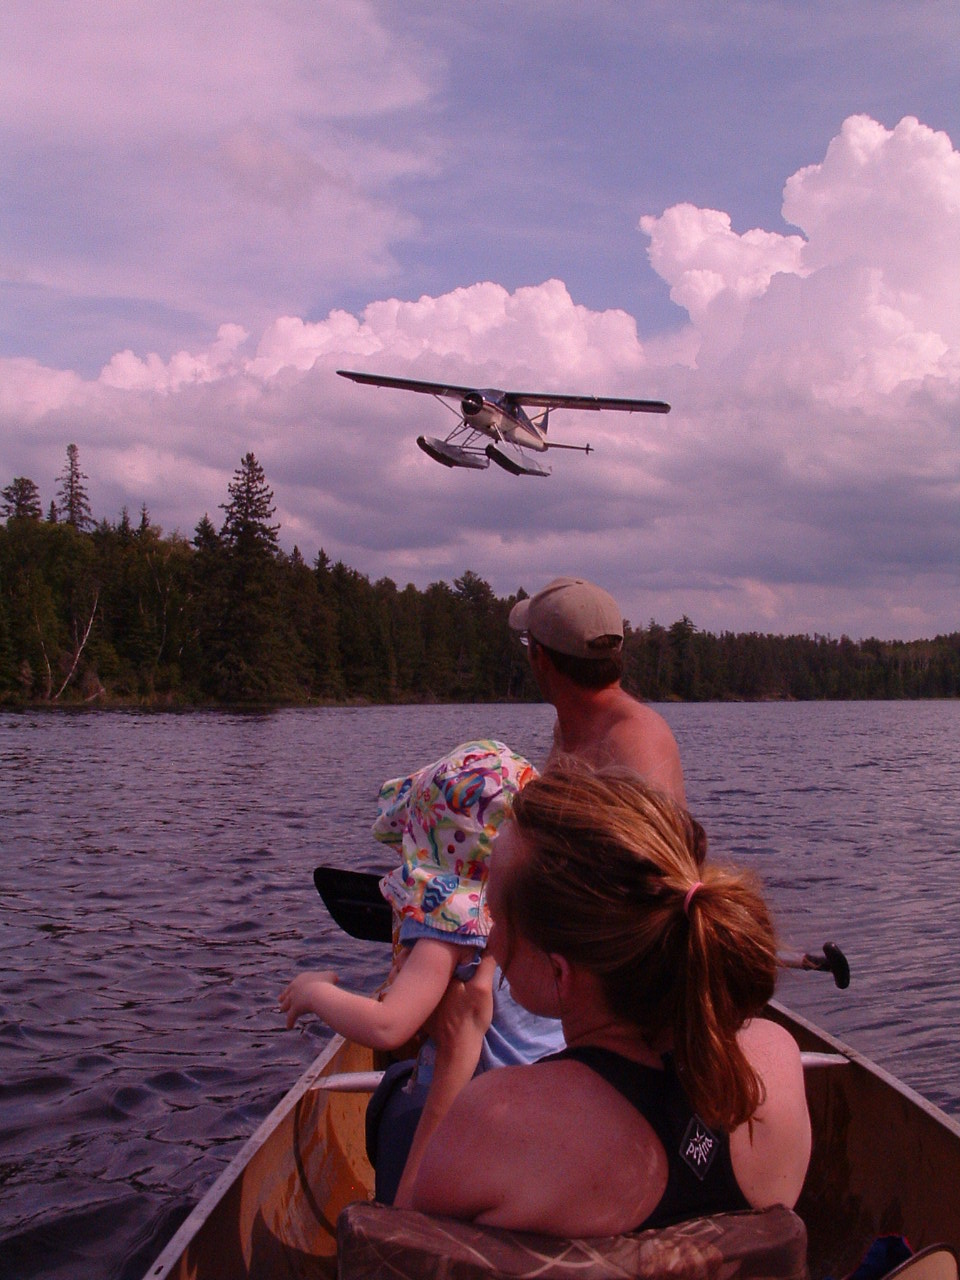 float plane